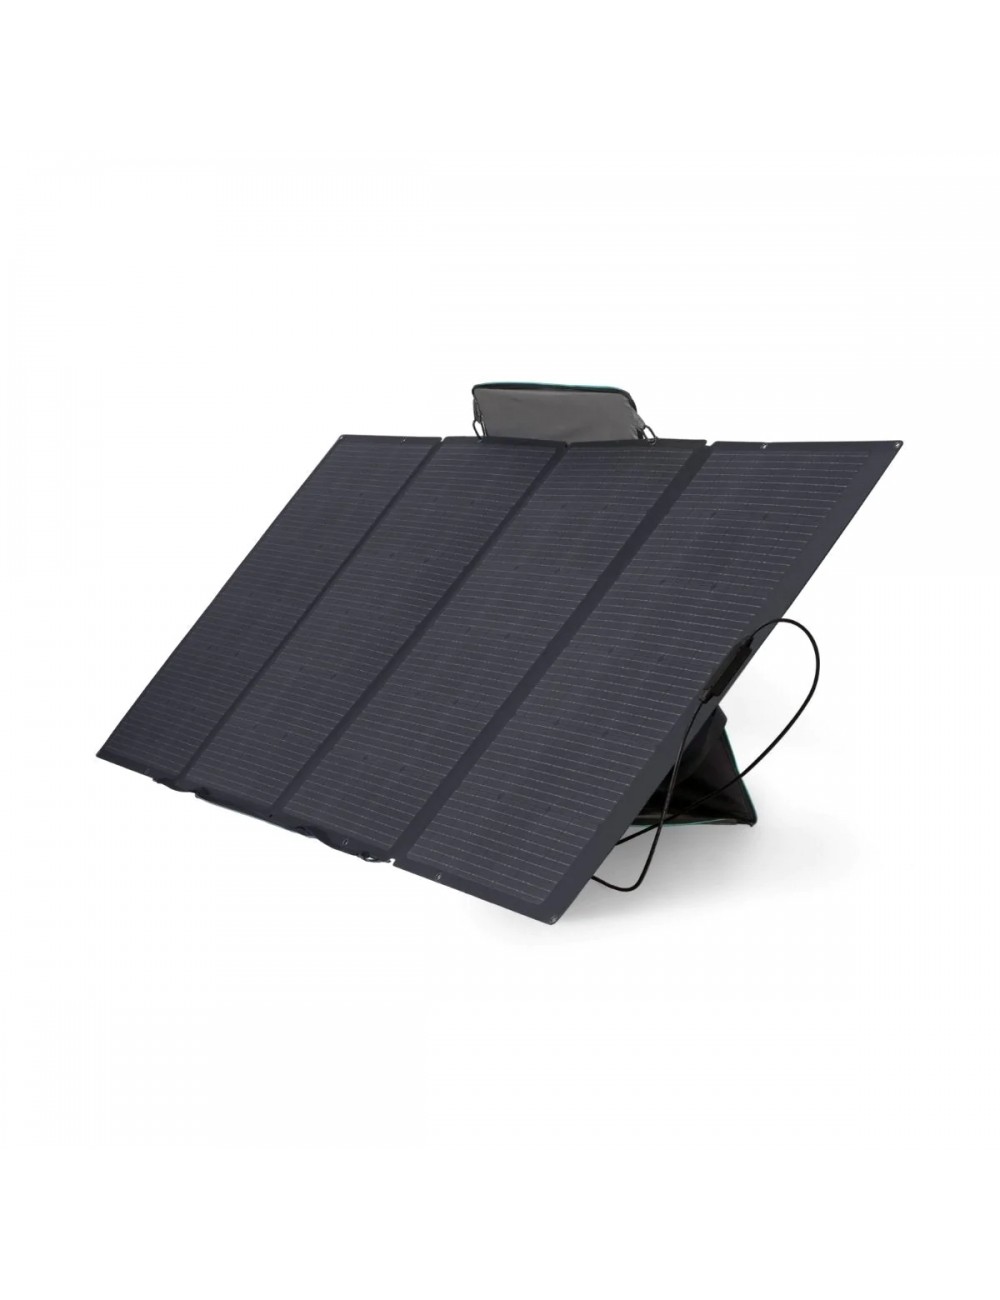 Panel solar portátil EcoFlow 400w